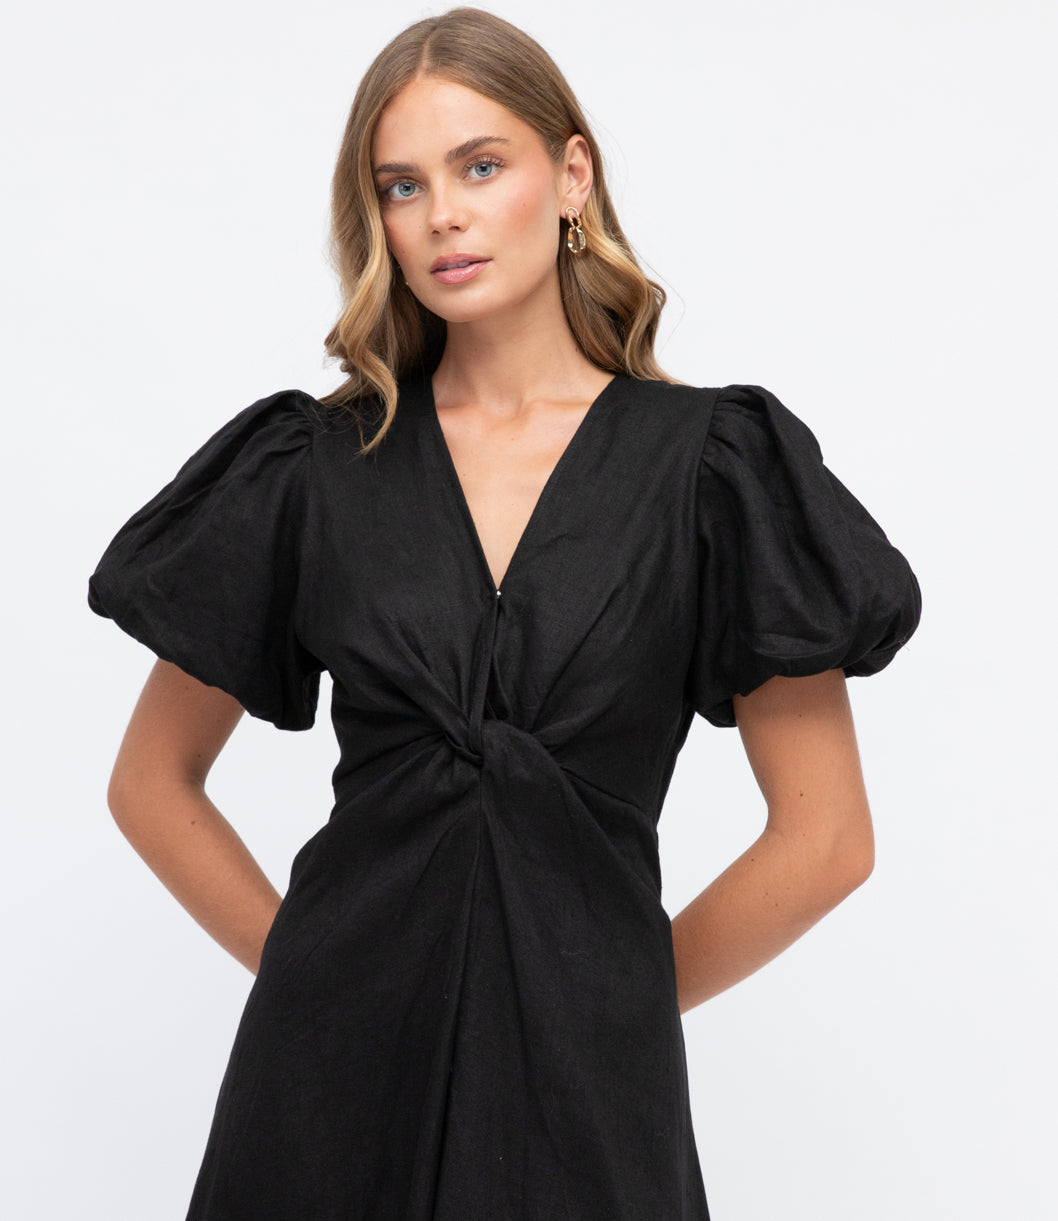 Chrystal Twist Black Linen Dress